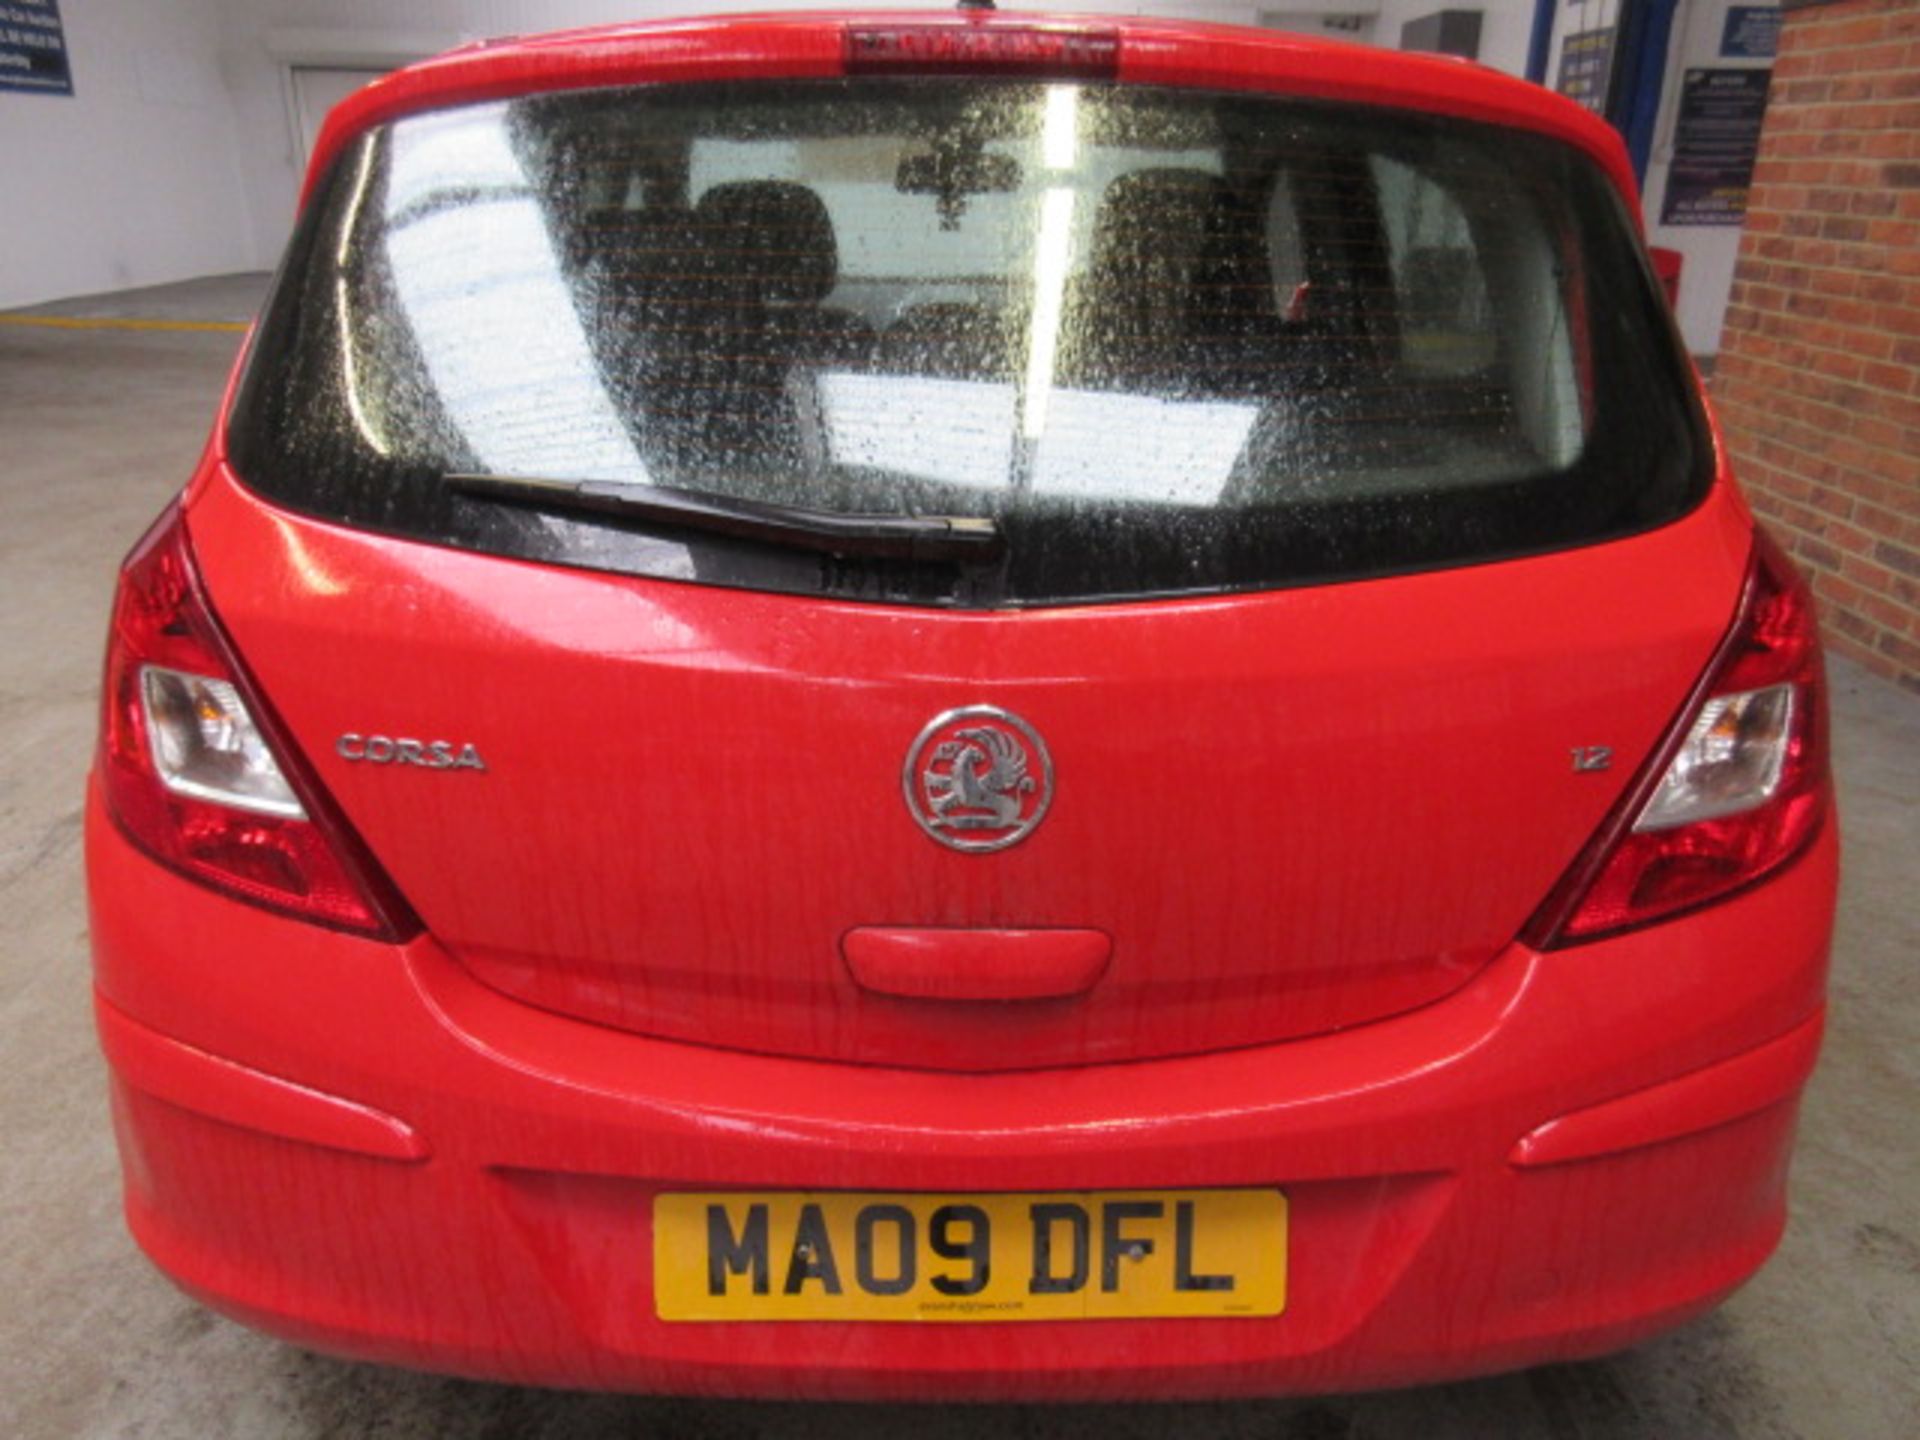 09 09 Vauxhall Corsa Design - Image 10 of 18